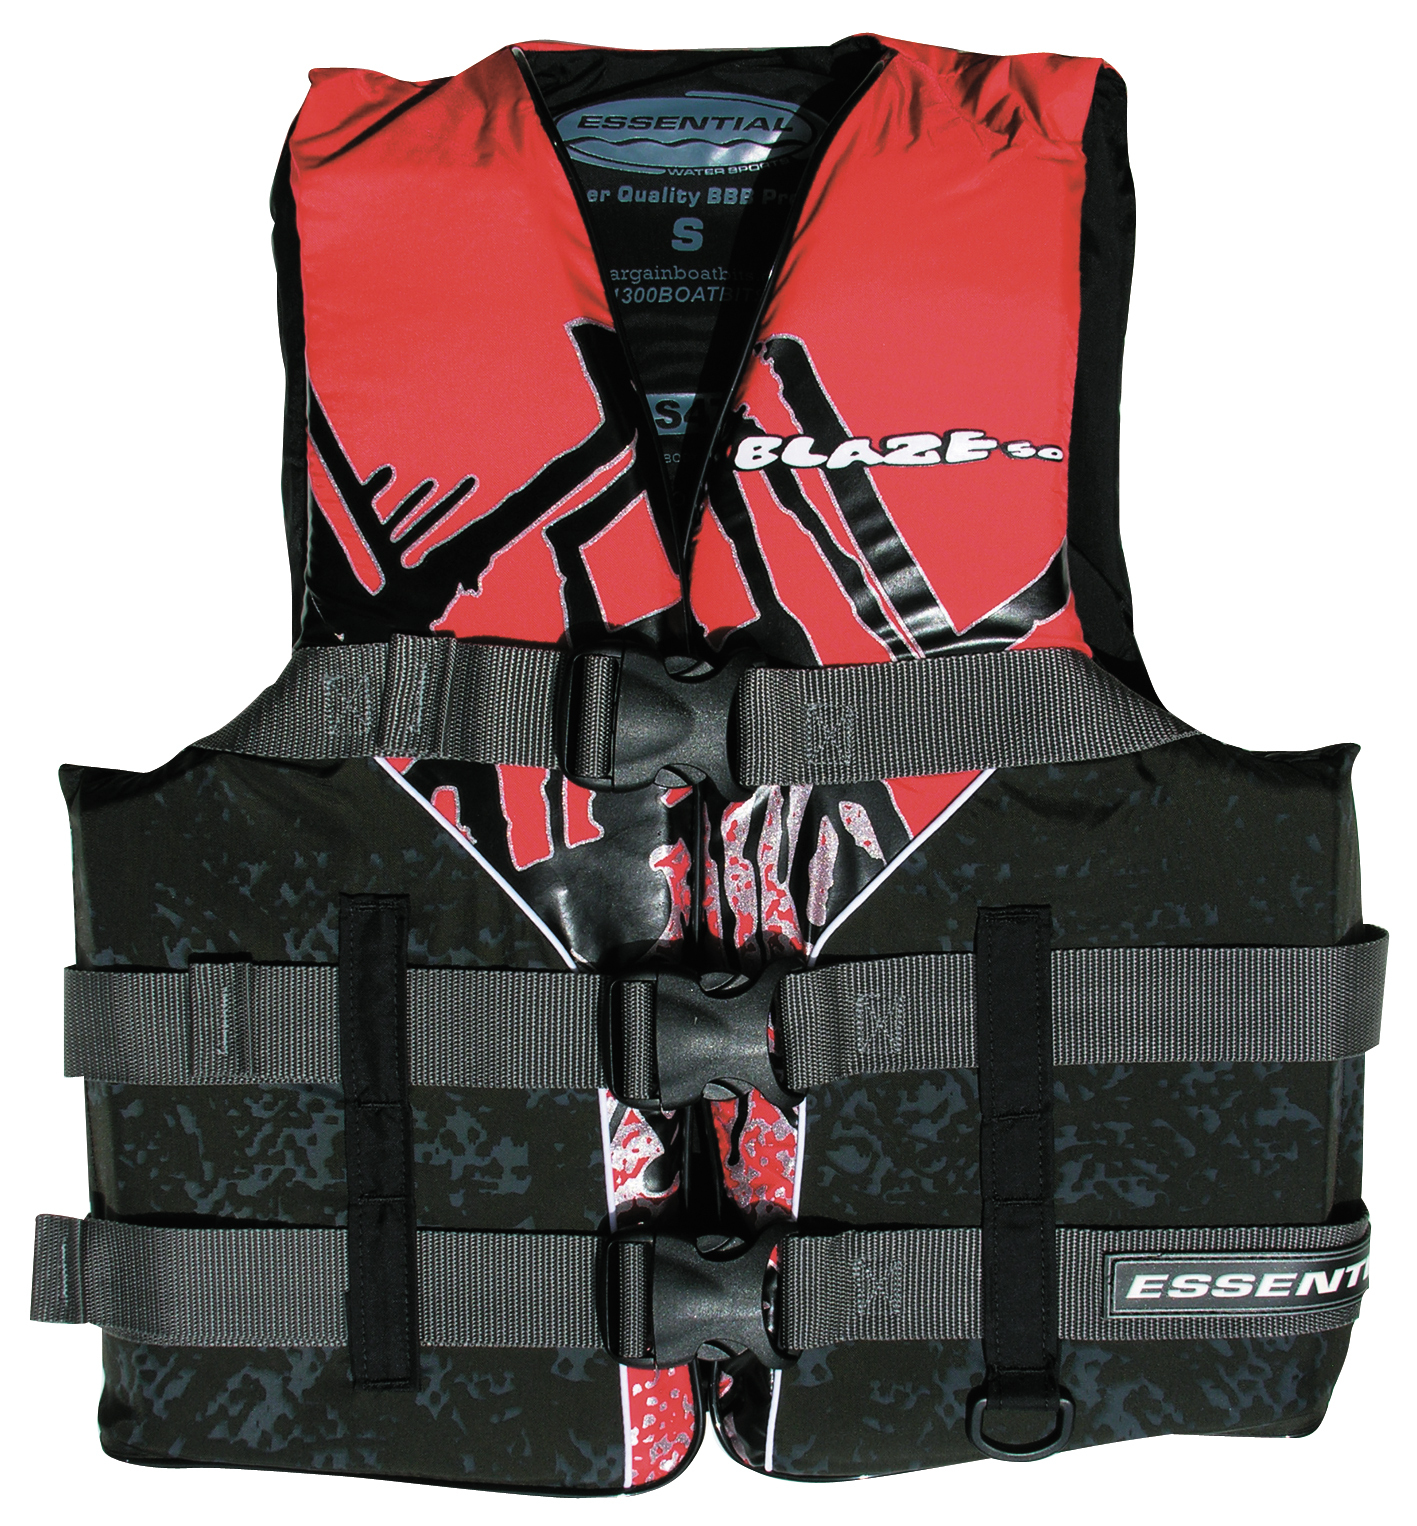 Essential Blaze L50 Adult Extra Large Ski Vest Red Essential